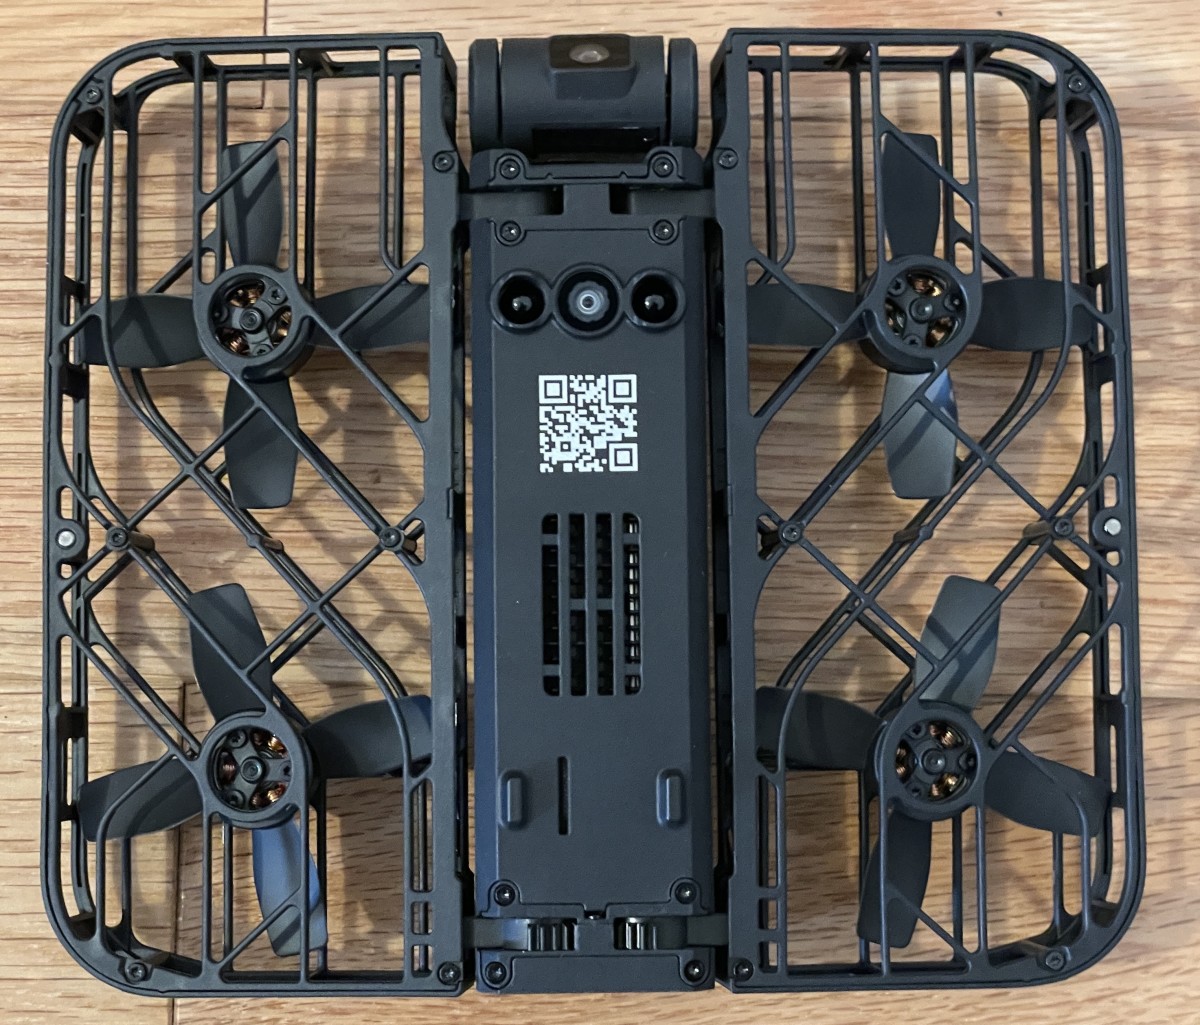 HOVERAir X1 Self-Flying Camera 